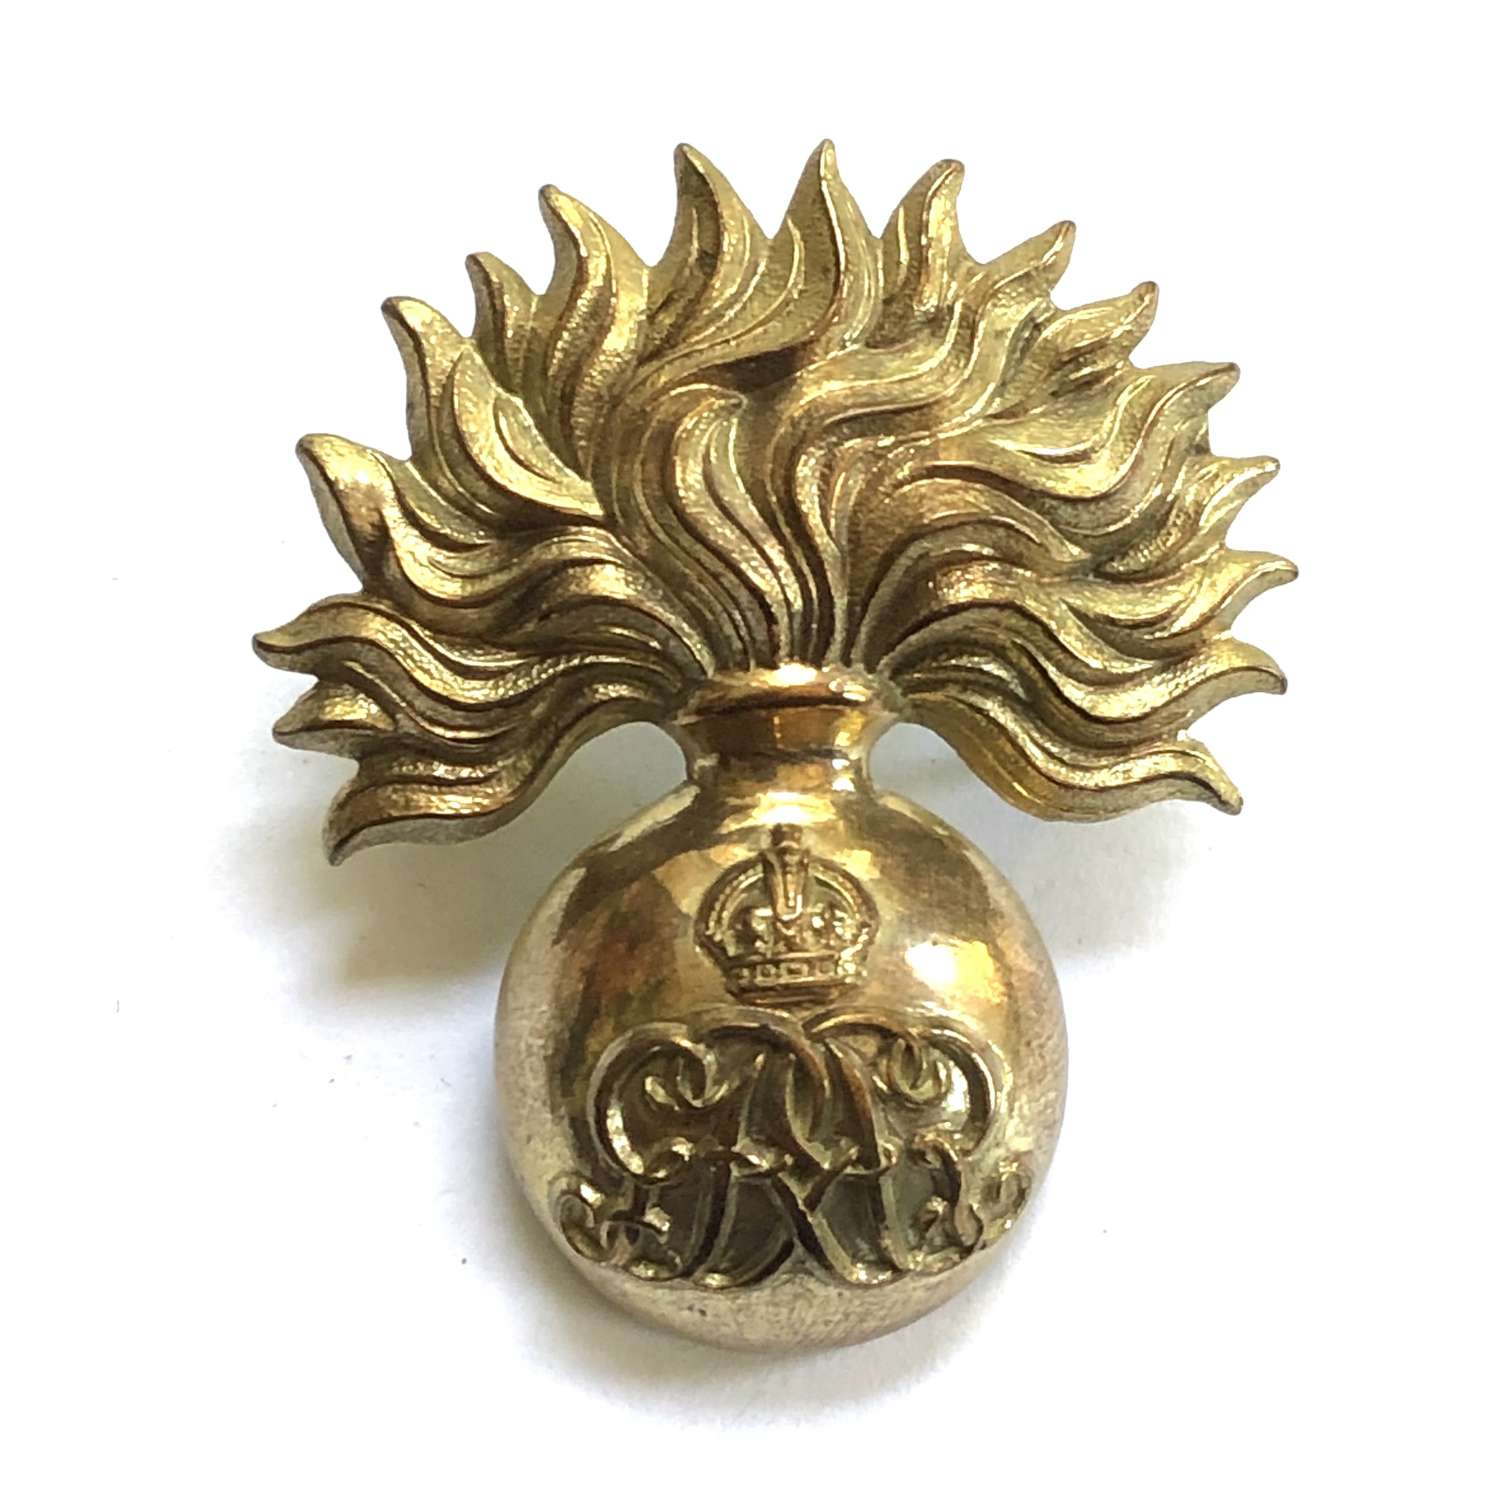 Grenadier Guards GvR Sergeant’s cap badge circa 1911-36